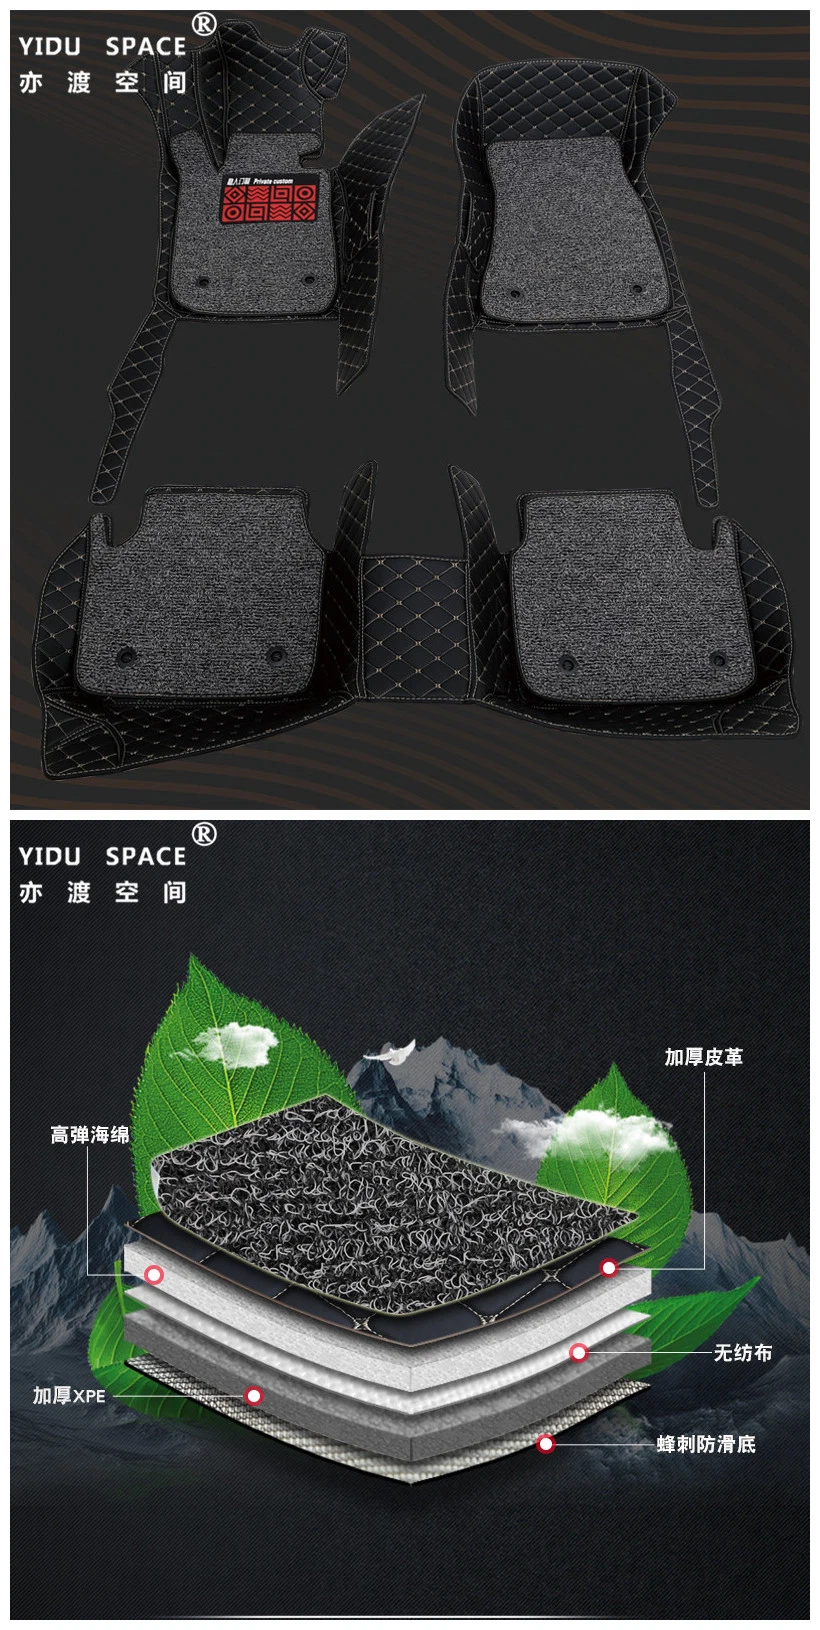 Customized Anti-Slip Leather PVC Wire Coil 5D Carpet Car Mat